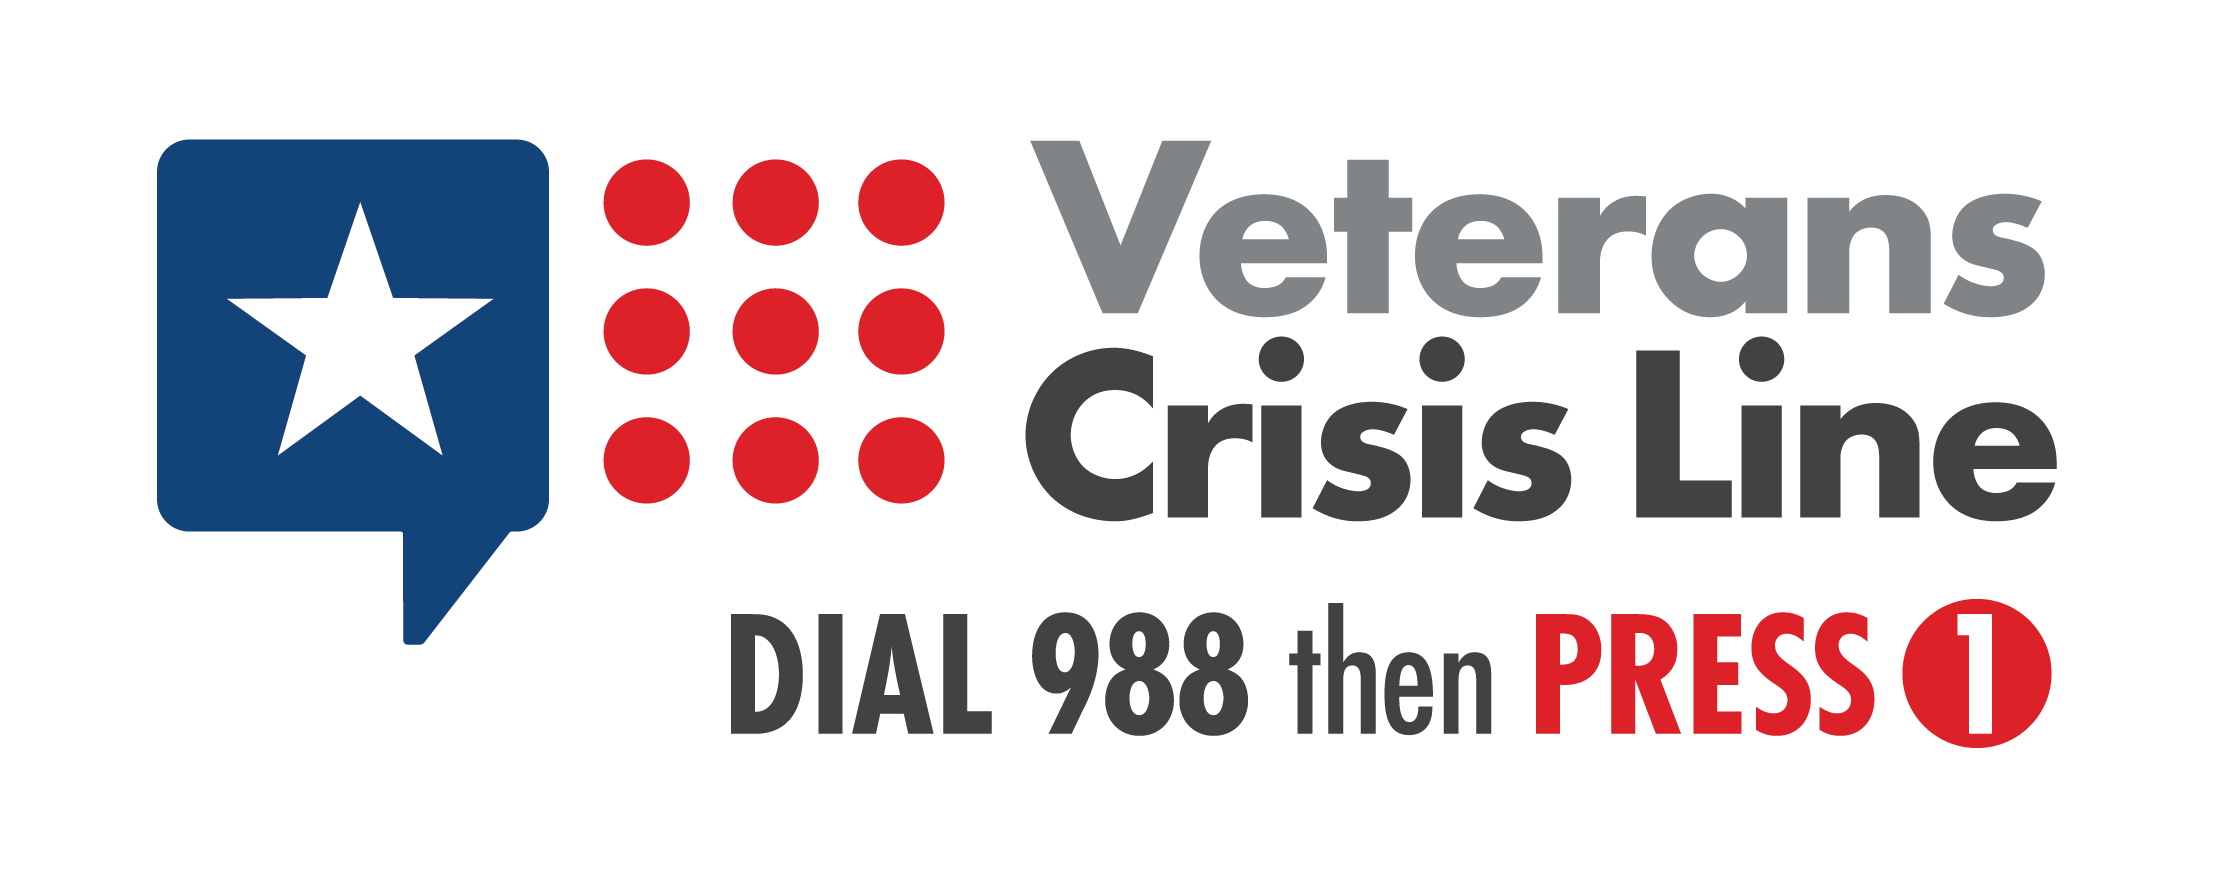 Veterans Crisis Line - Dial 988 Press 1